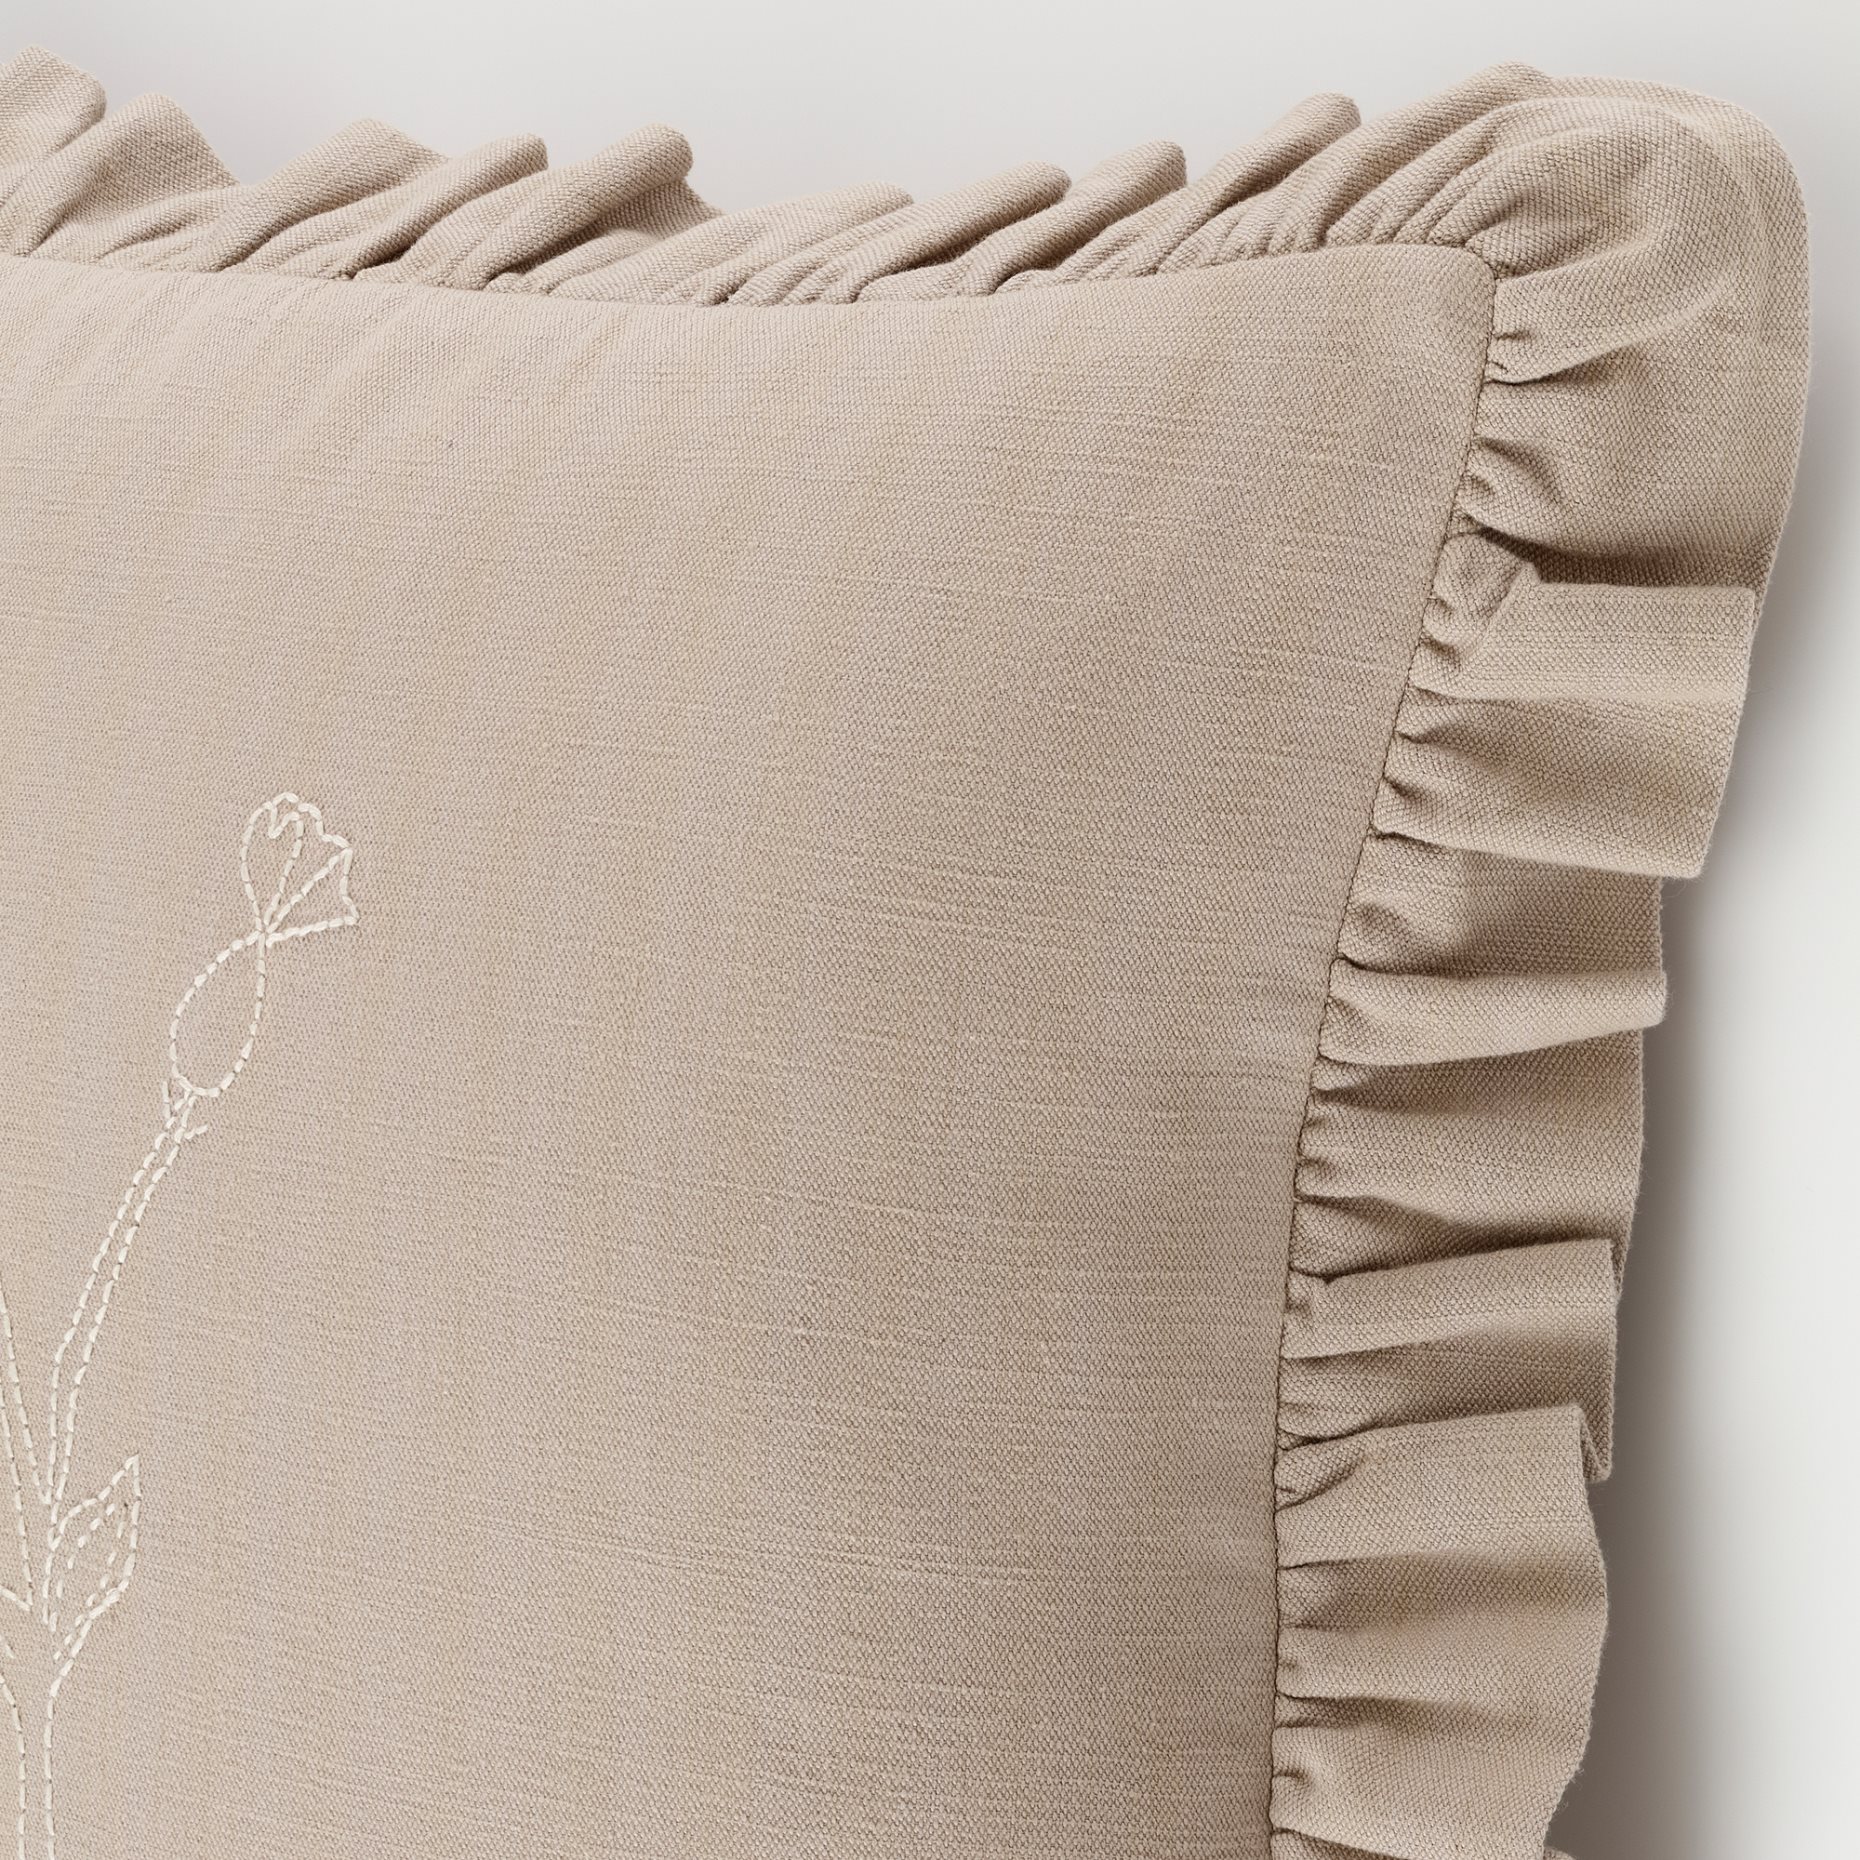 AKERNEJLIKA, cushion cover/embroidery, 50x50 cm, 505.772.02